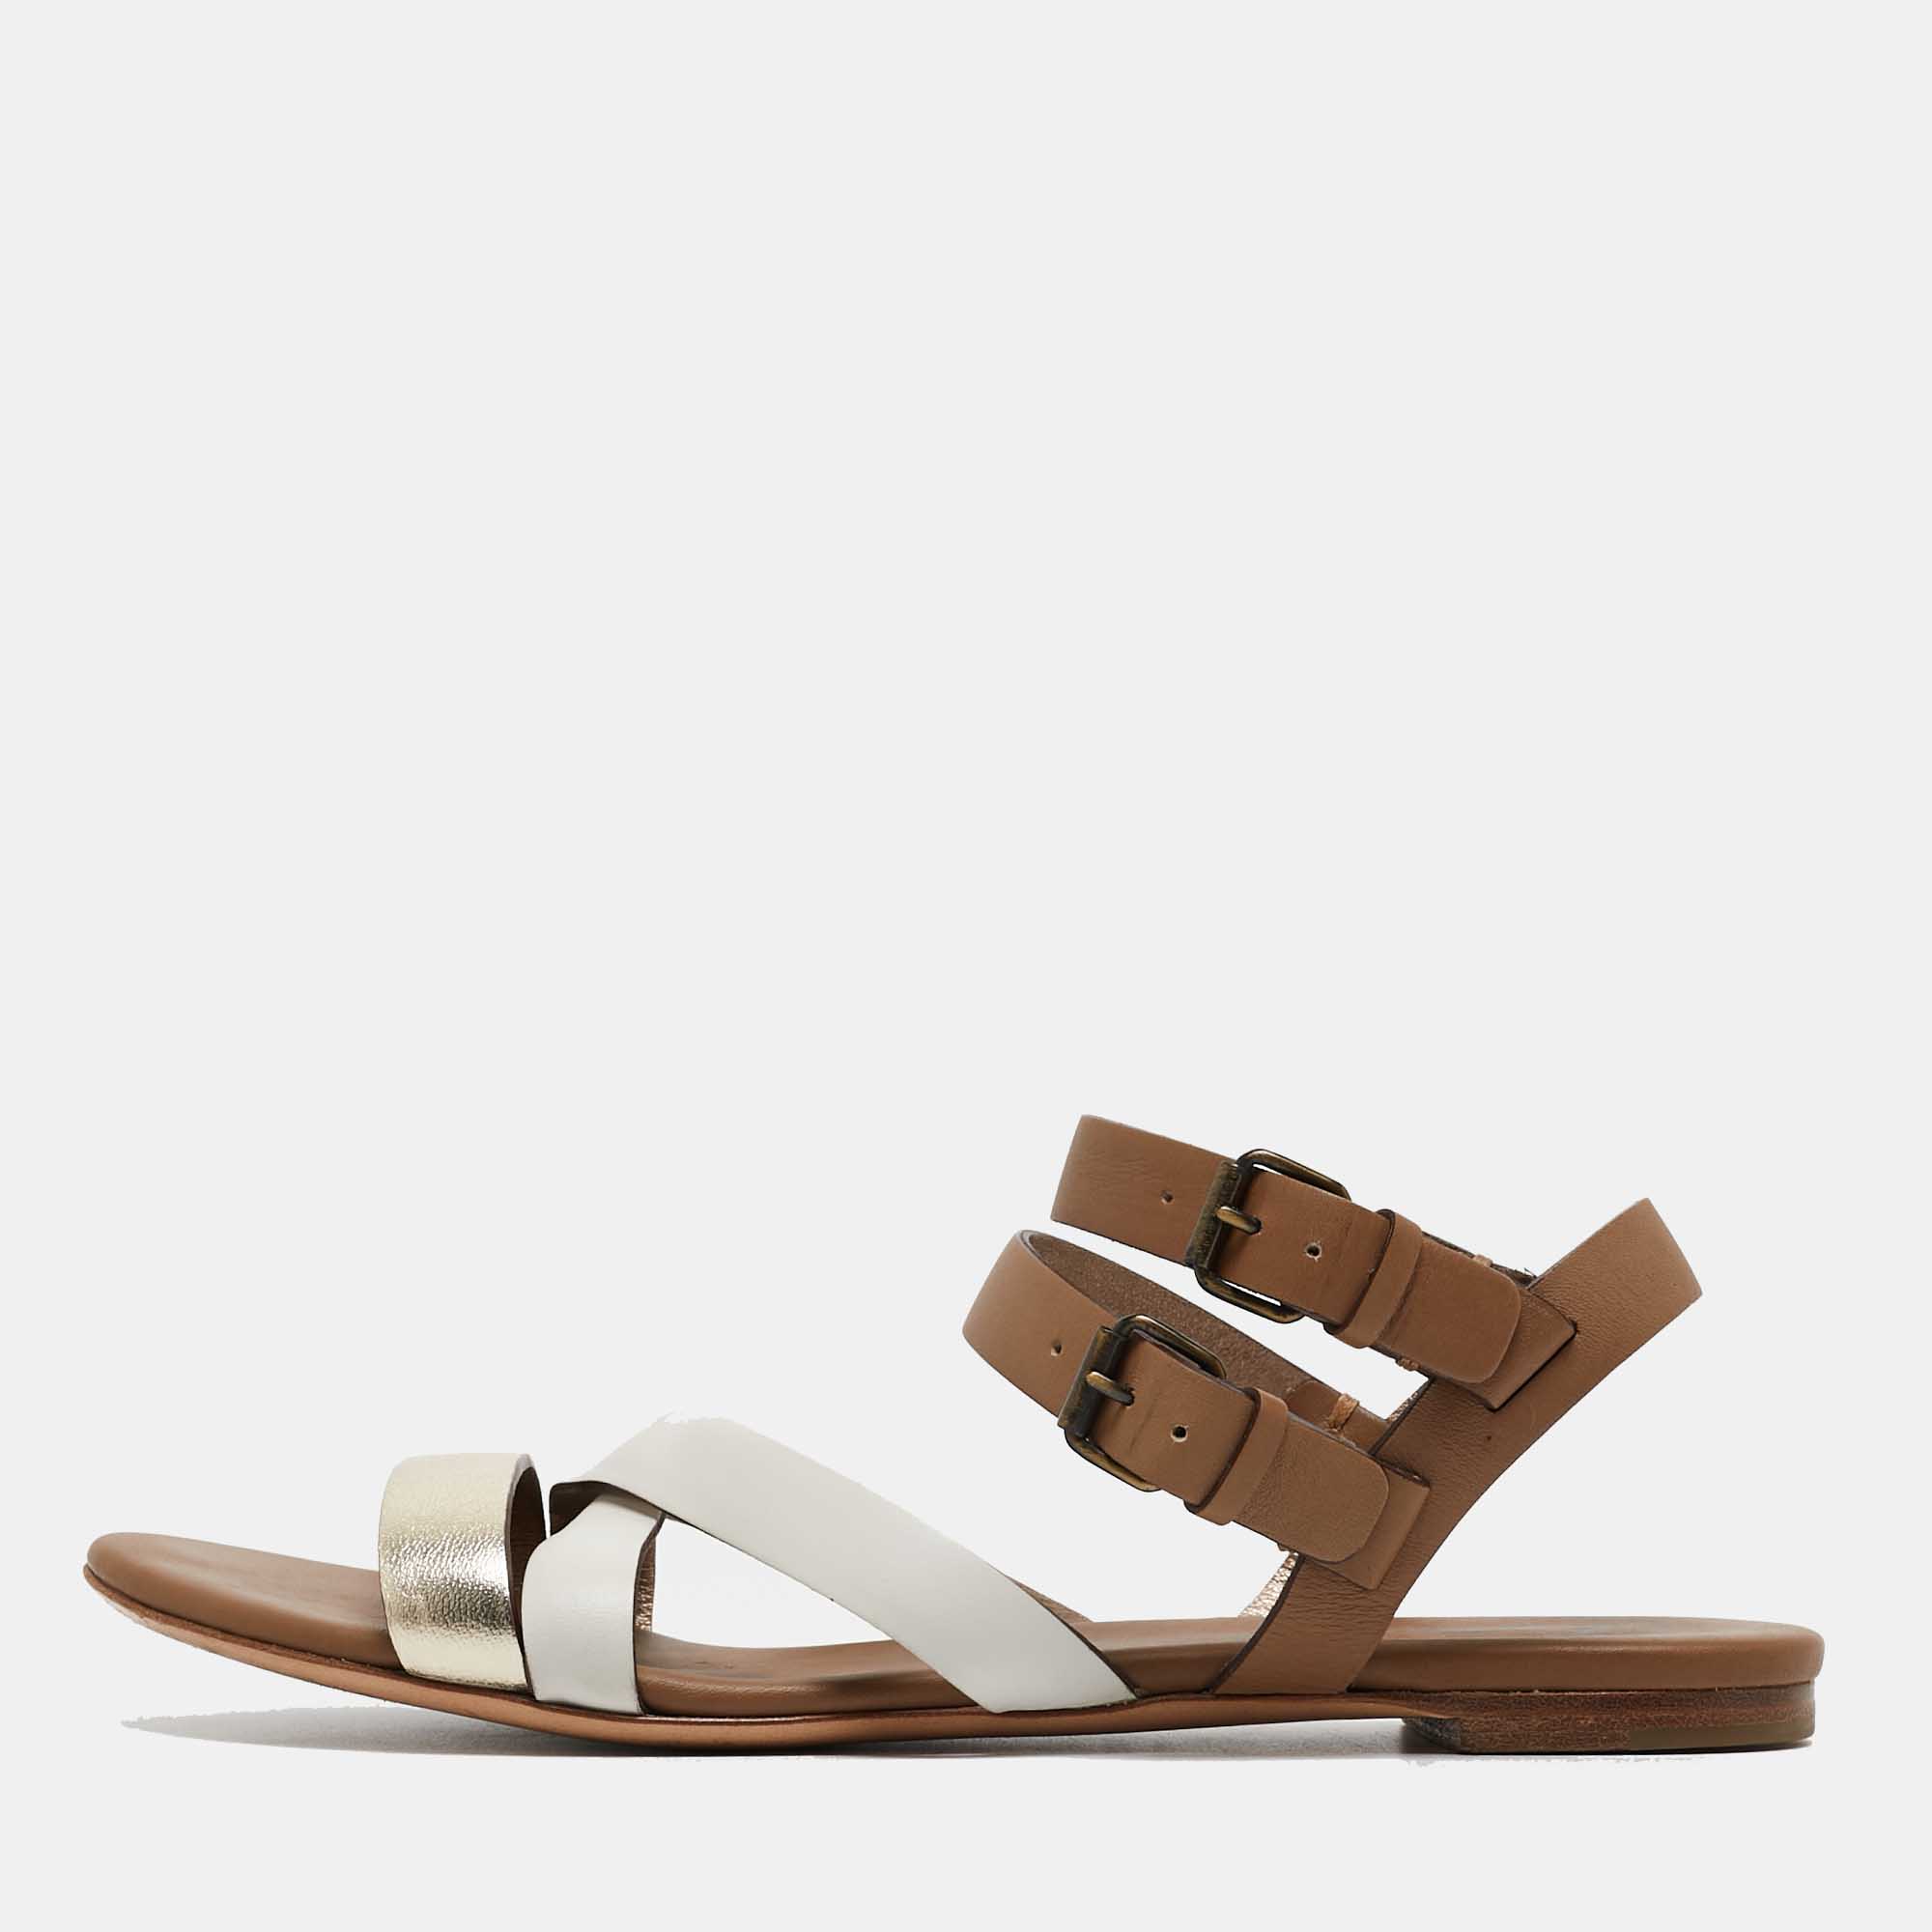 Lanvin Metallic/White Leather Ankle Strap Slide Flats Size 38